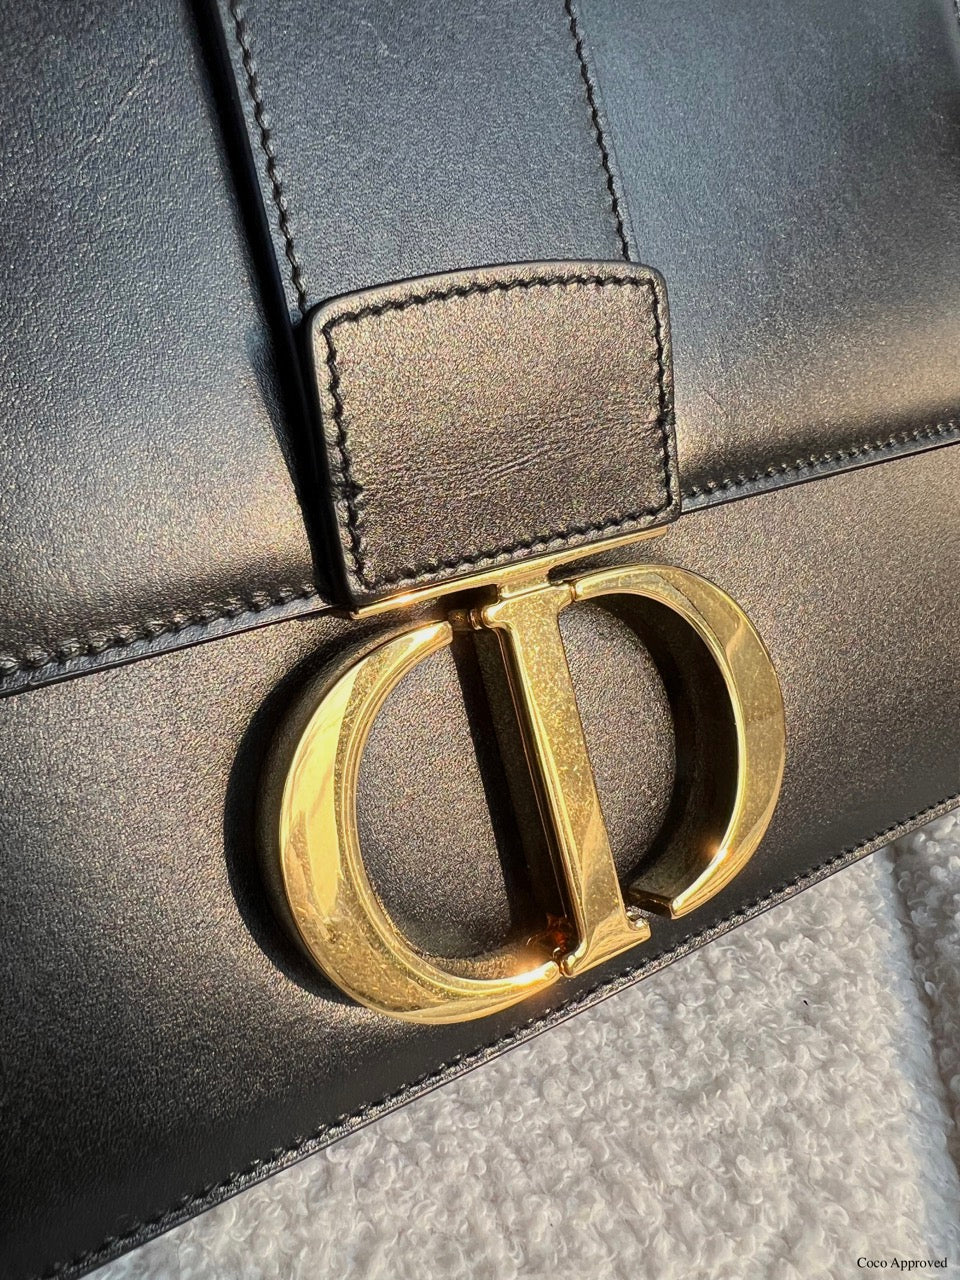 How To Spot Fake Vs Real Dior 30 Montaigne Bag – LegitGrails